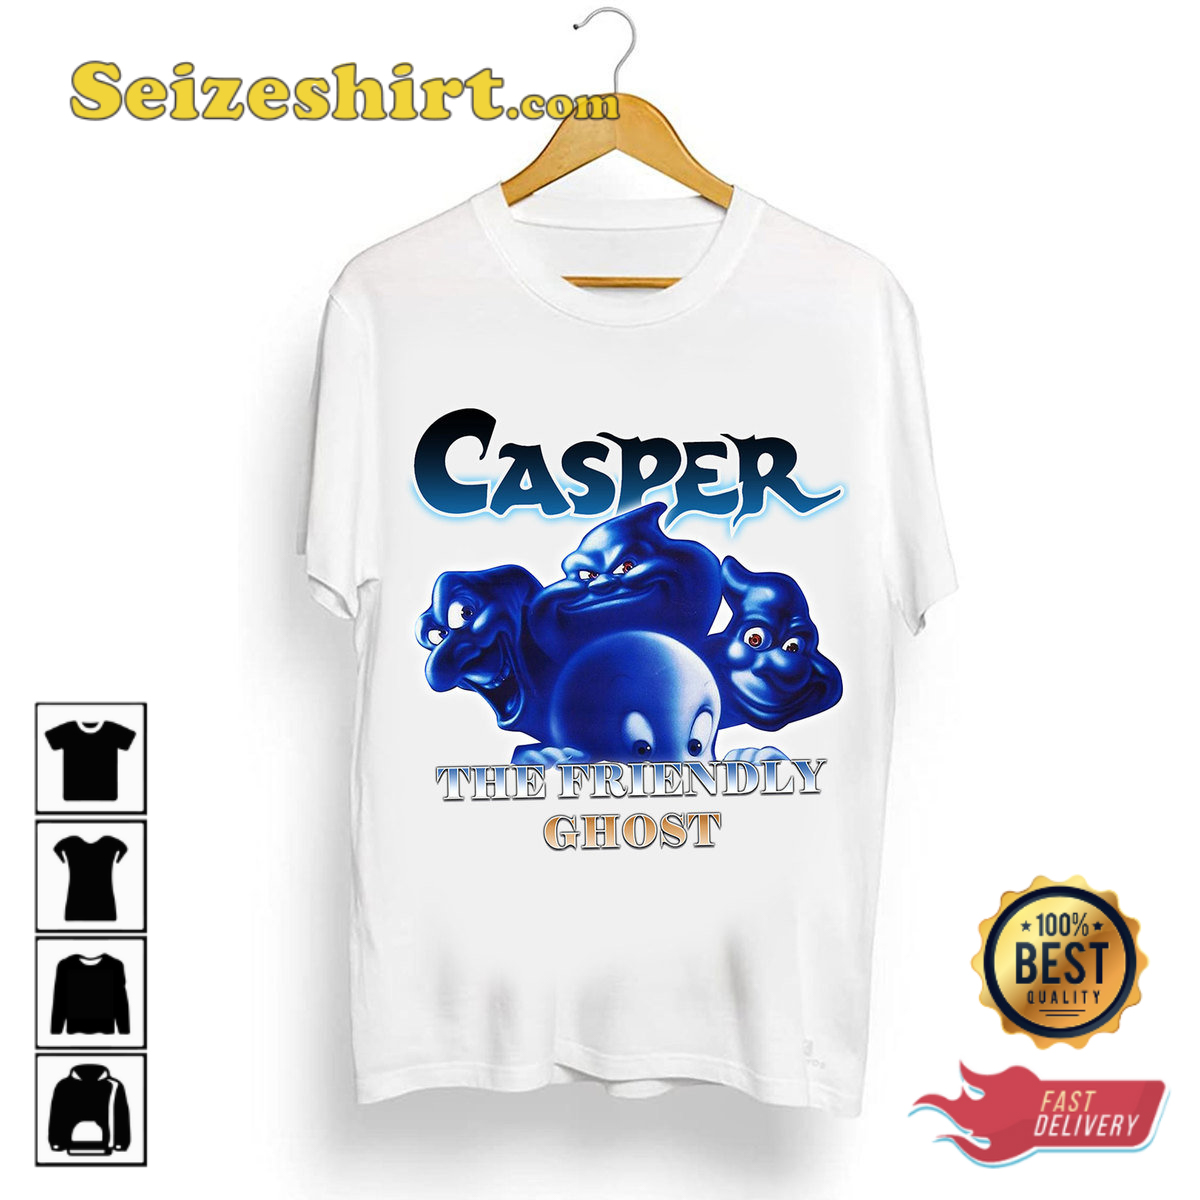 Vintage Casper The Friendly Ghost T-Shirt Cartoon Movie Merch Gift